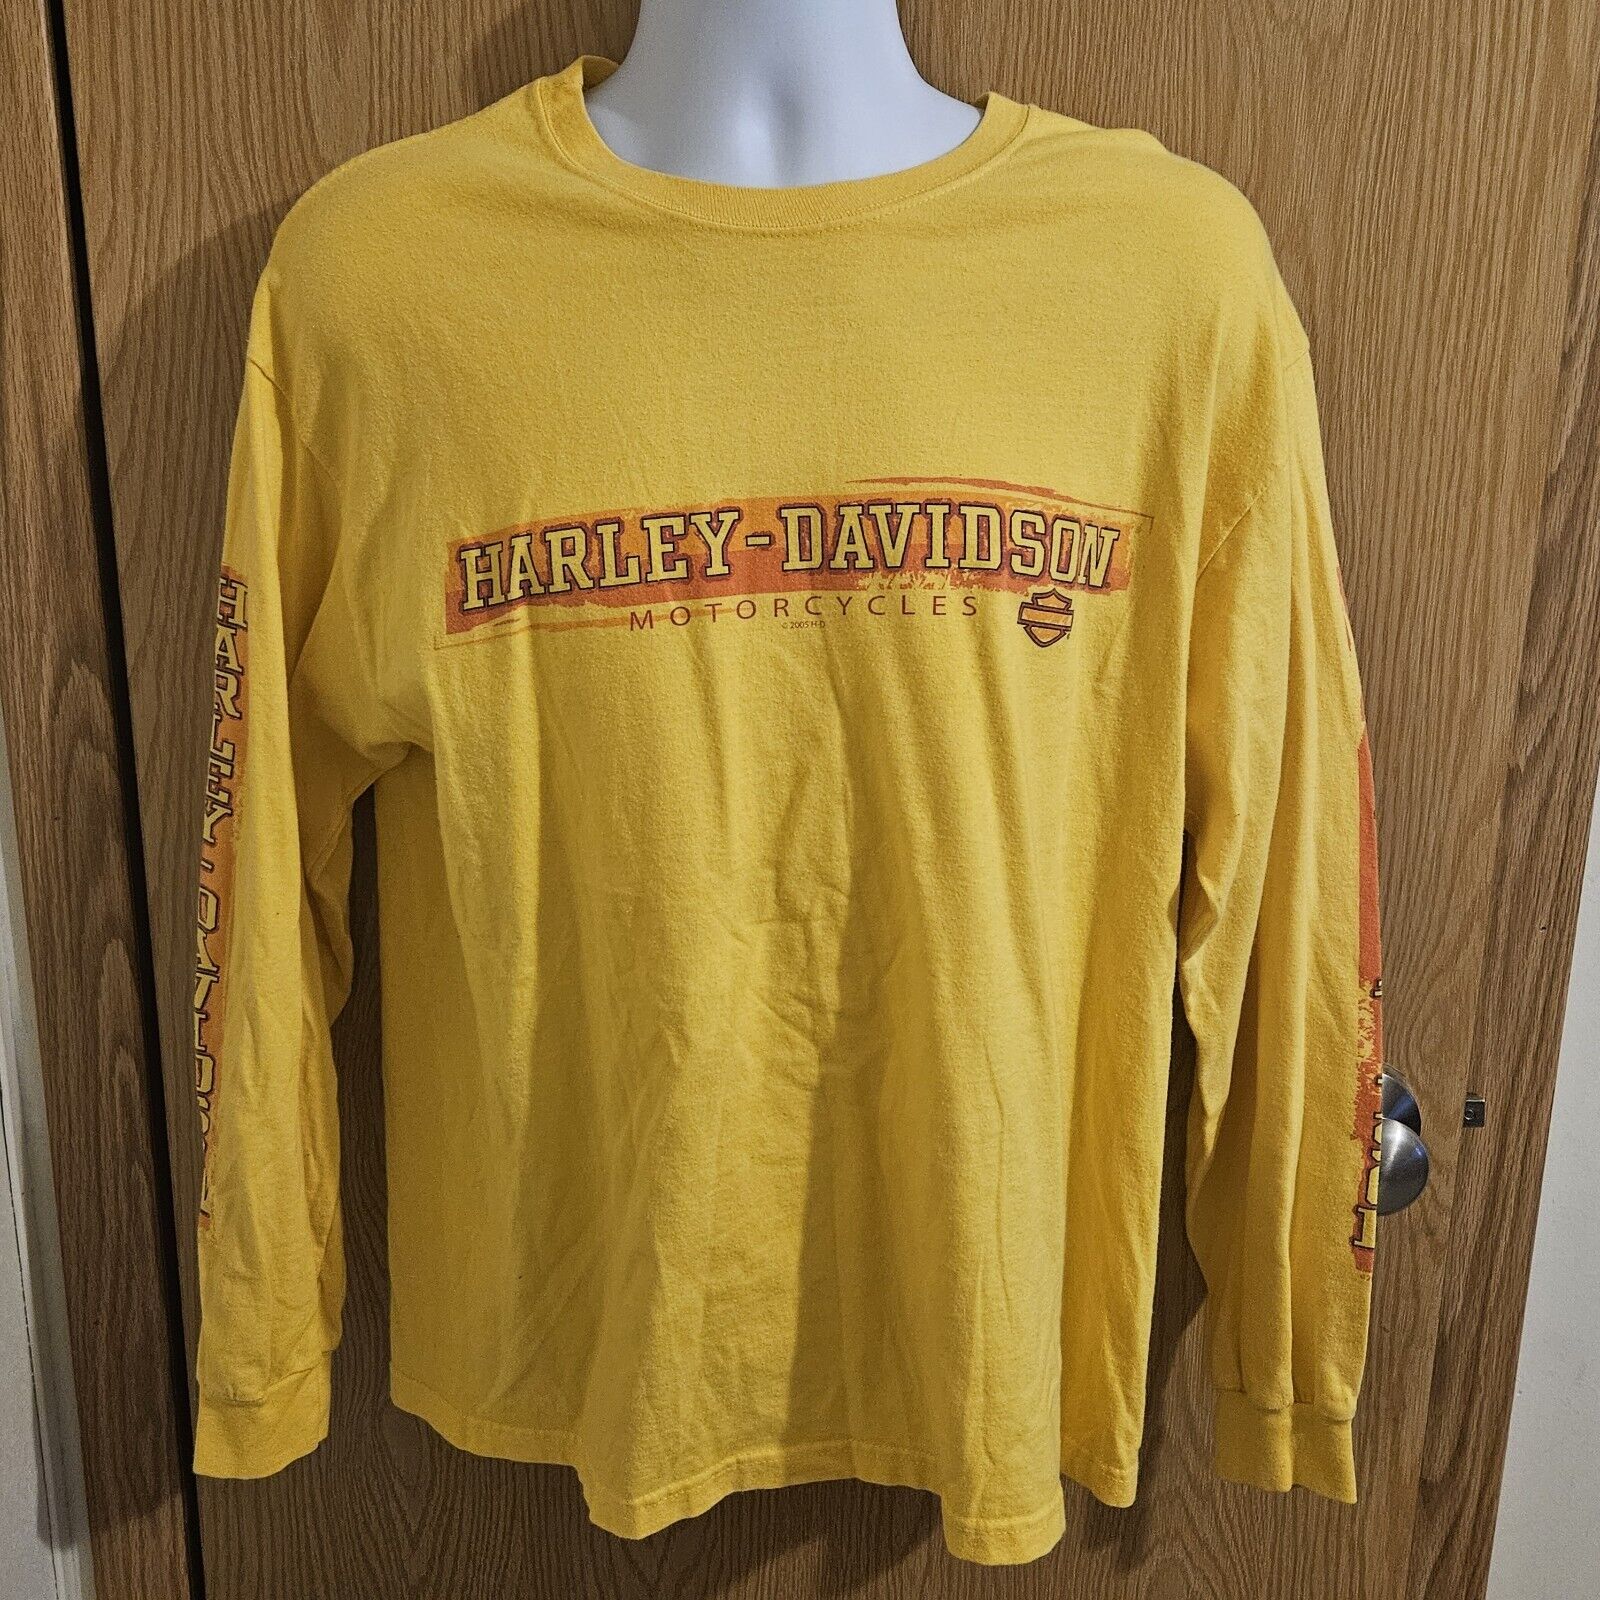 2004 Harley Davidson Long Sleeve Shirt Made In The USA Fort Wayne Indiana Jim...